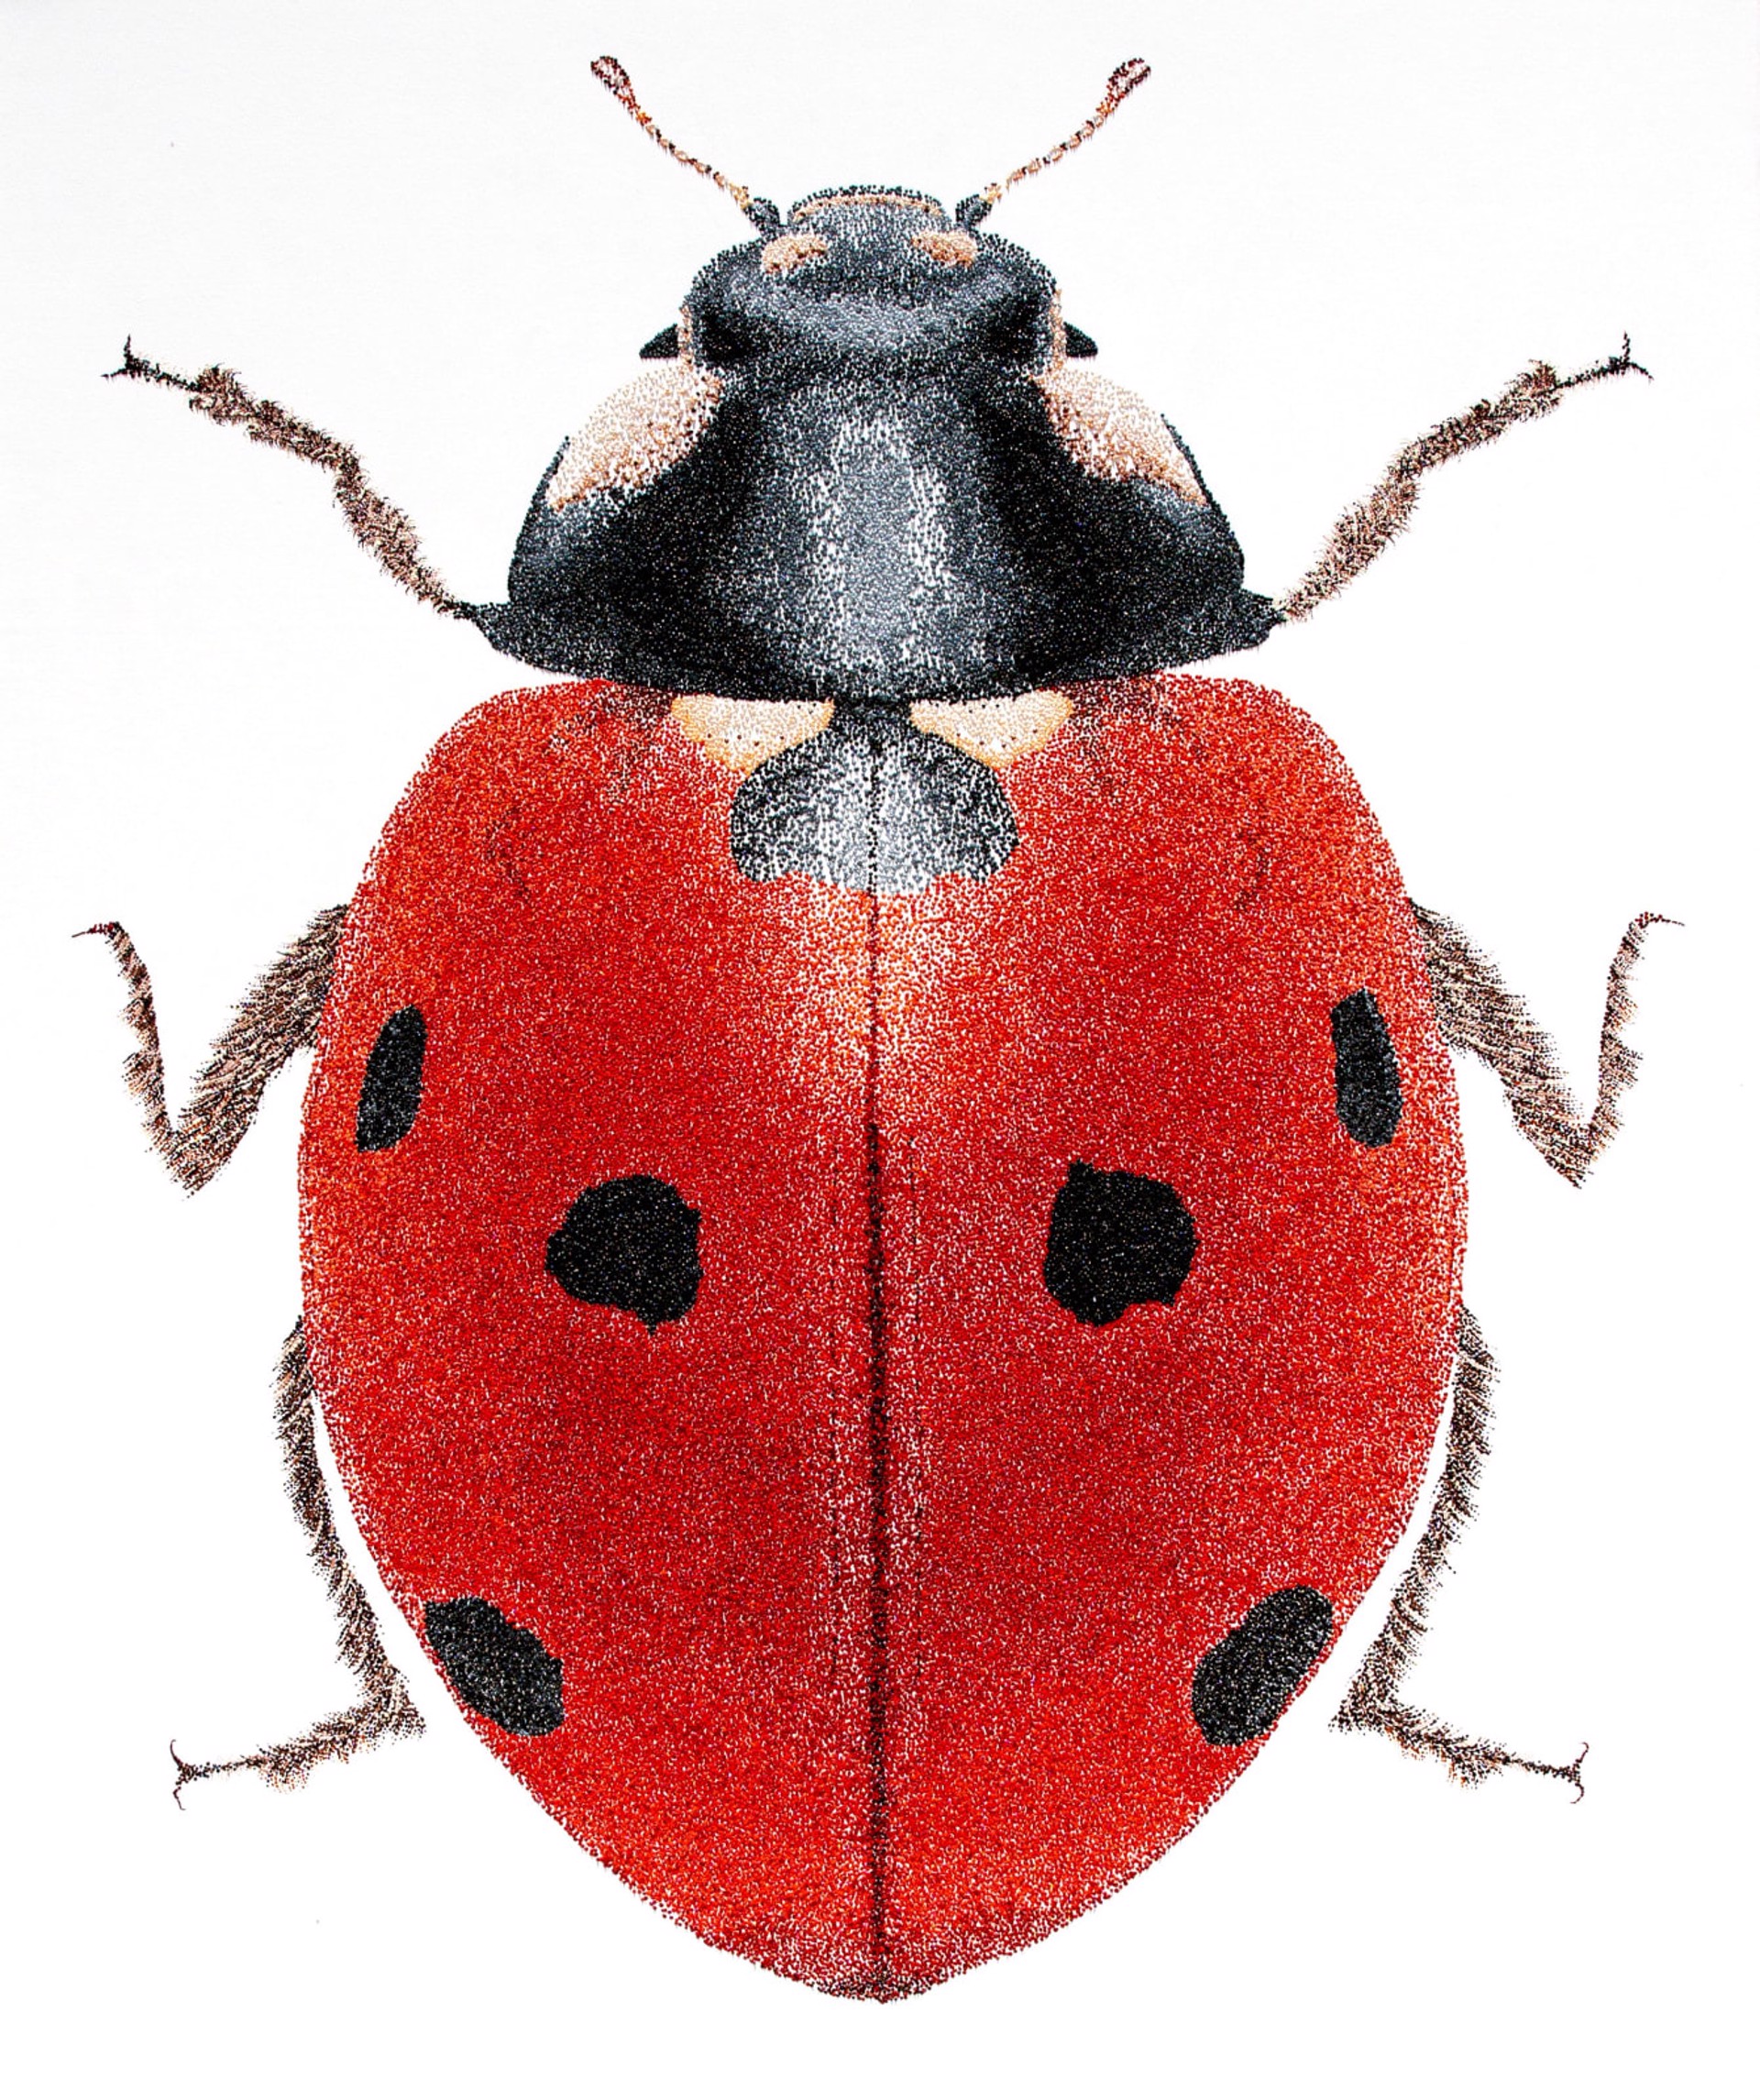 Lady Bug by Jonah Waterous